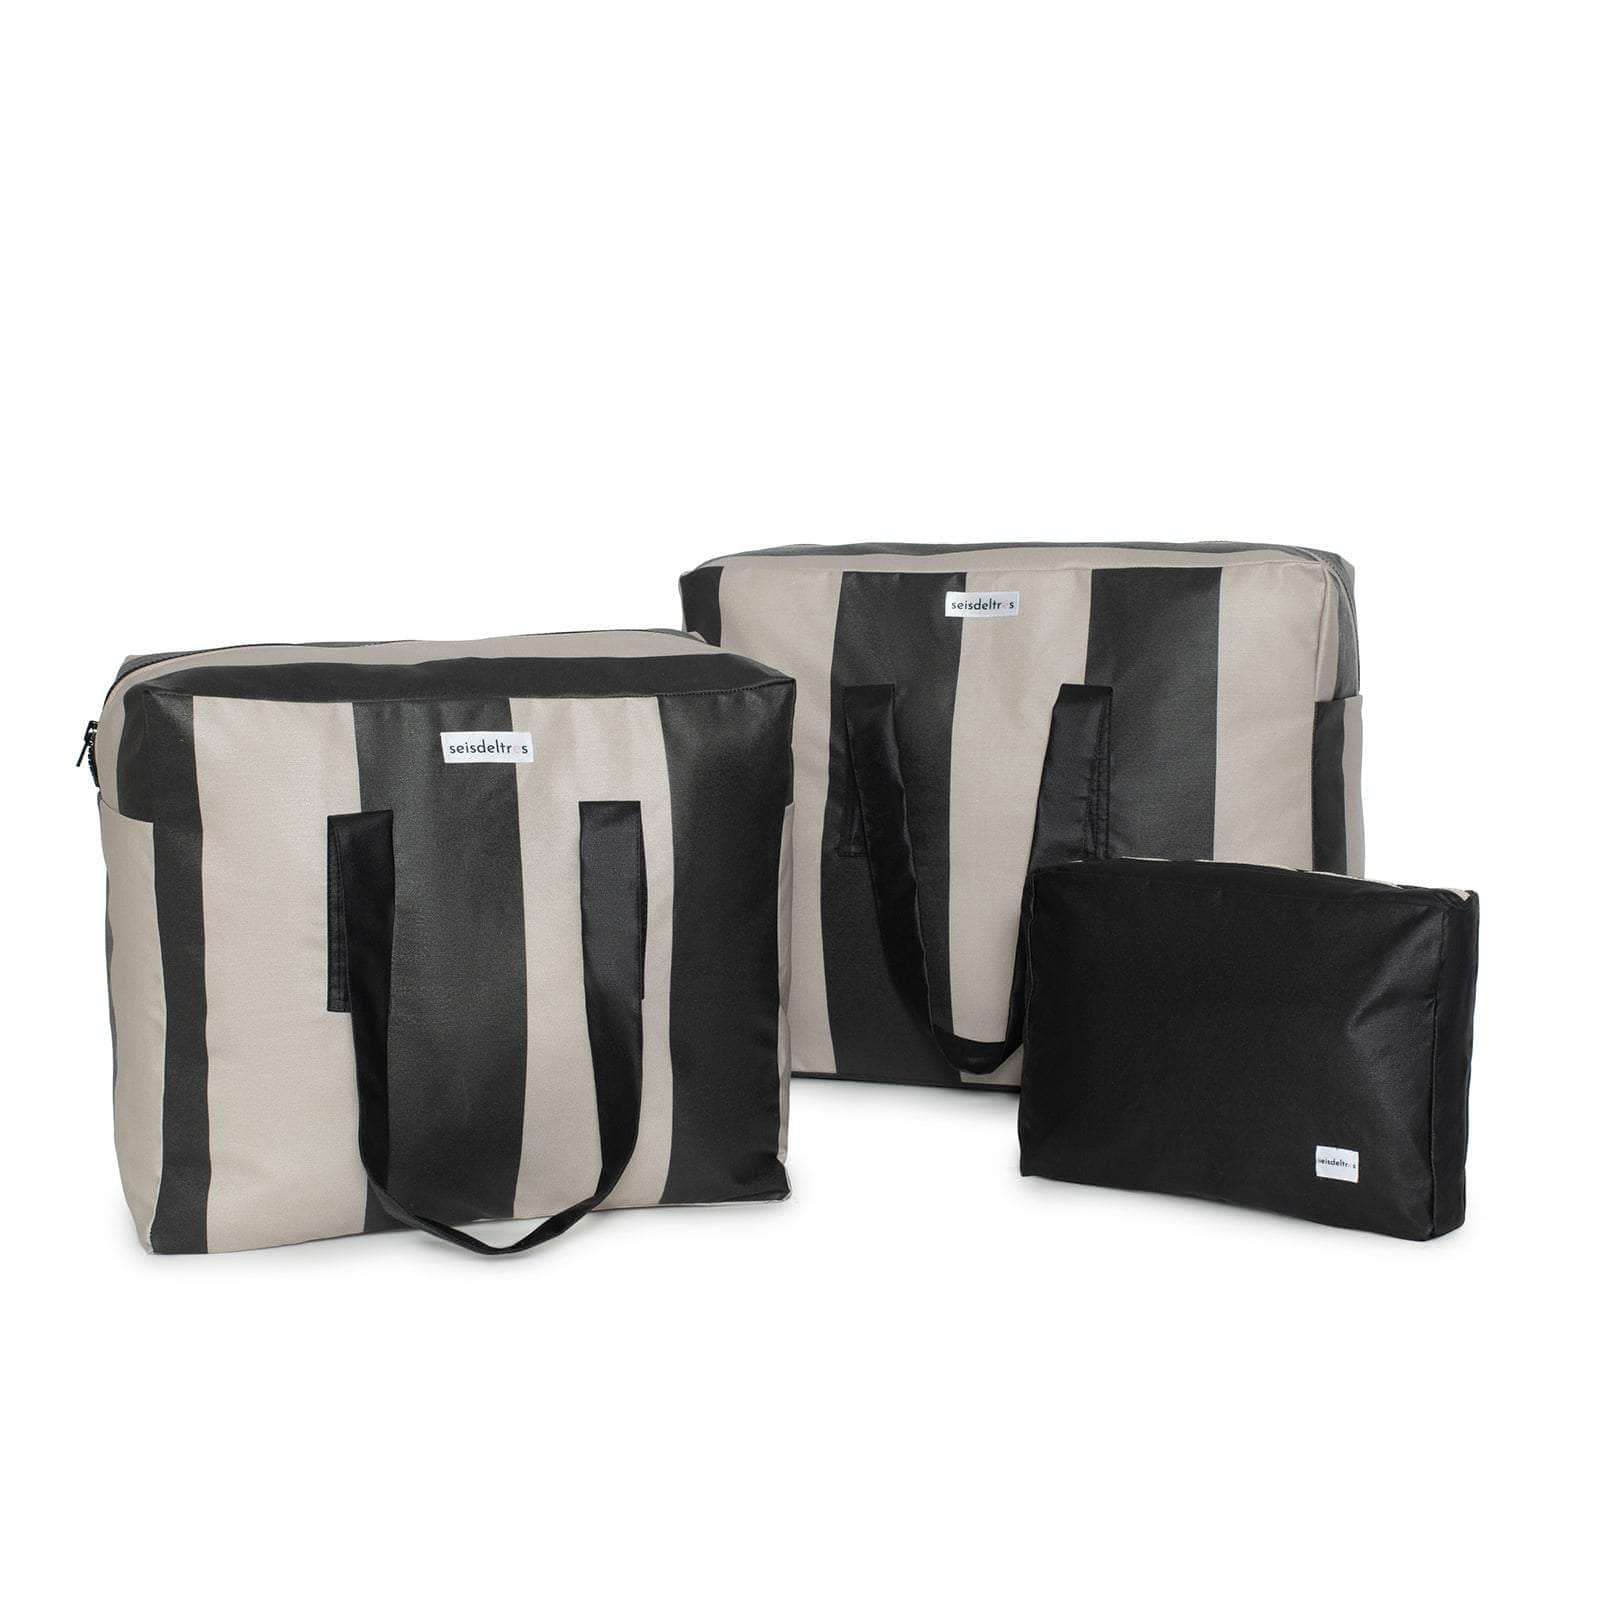 pack mybigbag Pack completo - bolsa L, bolsa XL y neceser - Raya Ancha Negro/Piedra